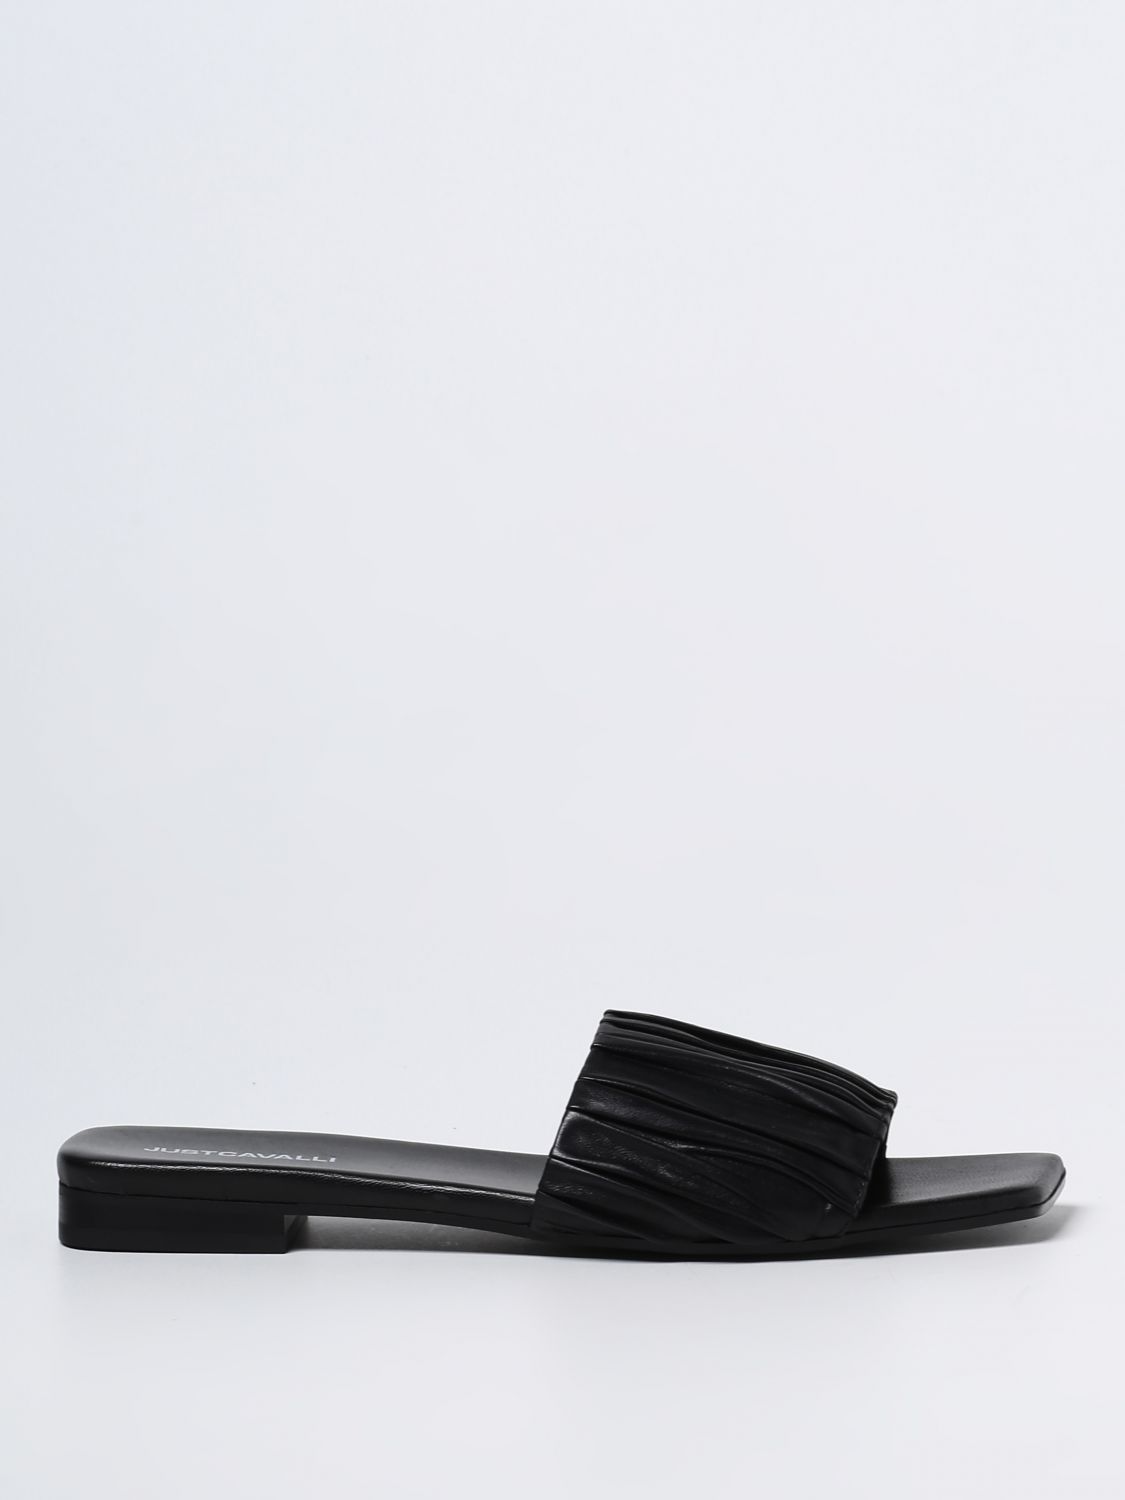 Sandales plates Just Cavalli: Chaussures femme Just Cavalli noir 1